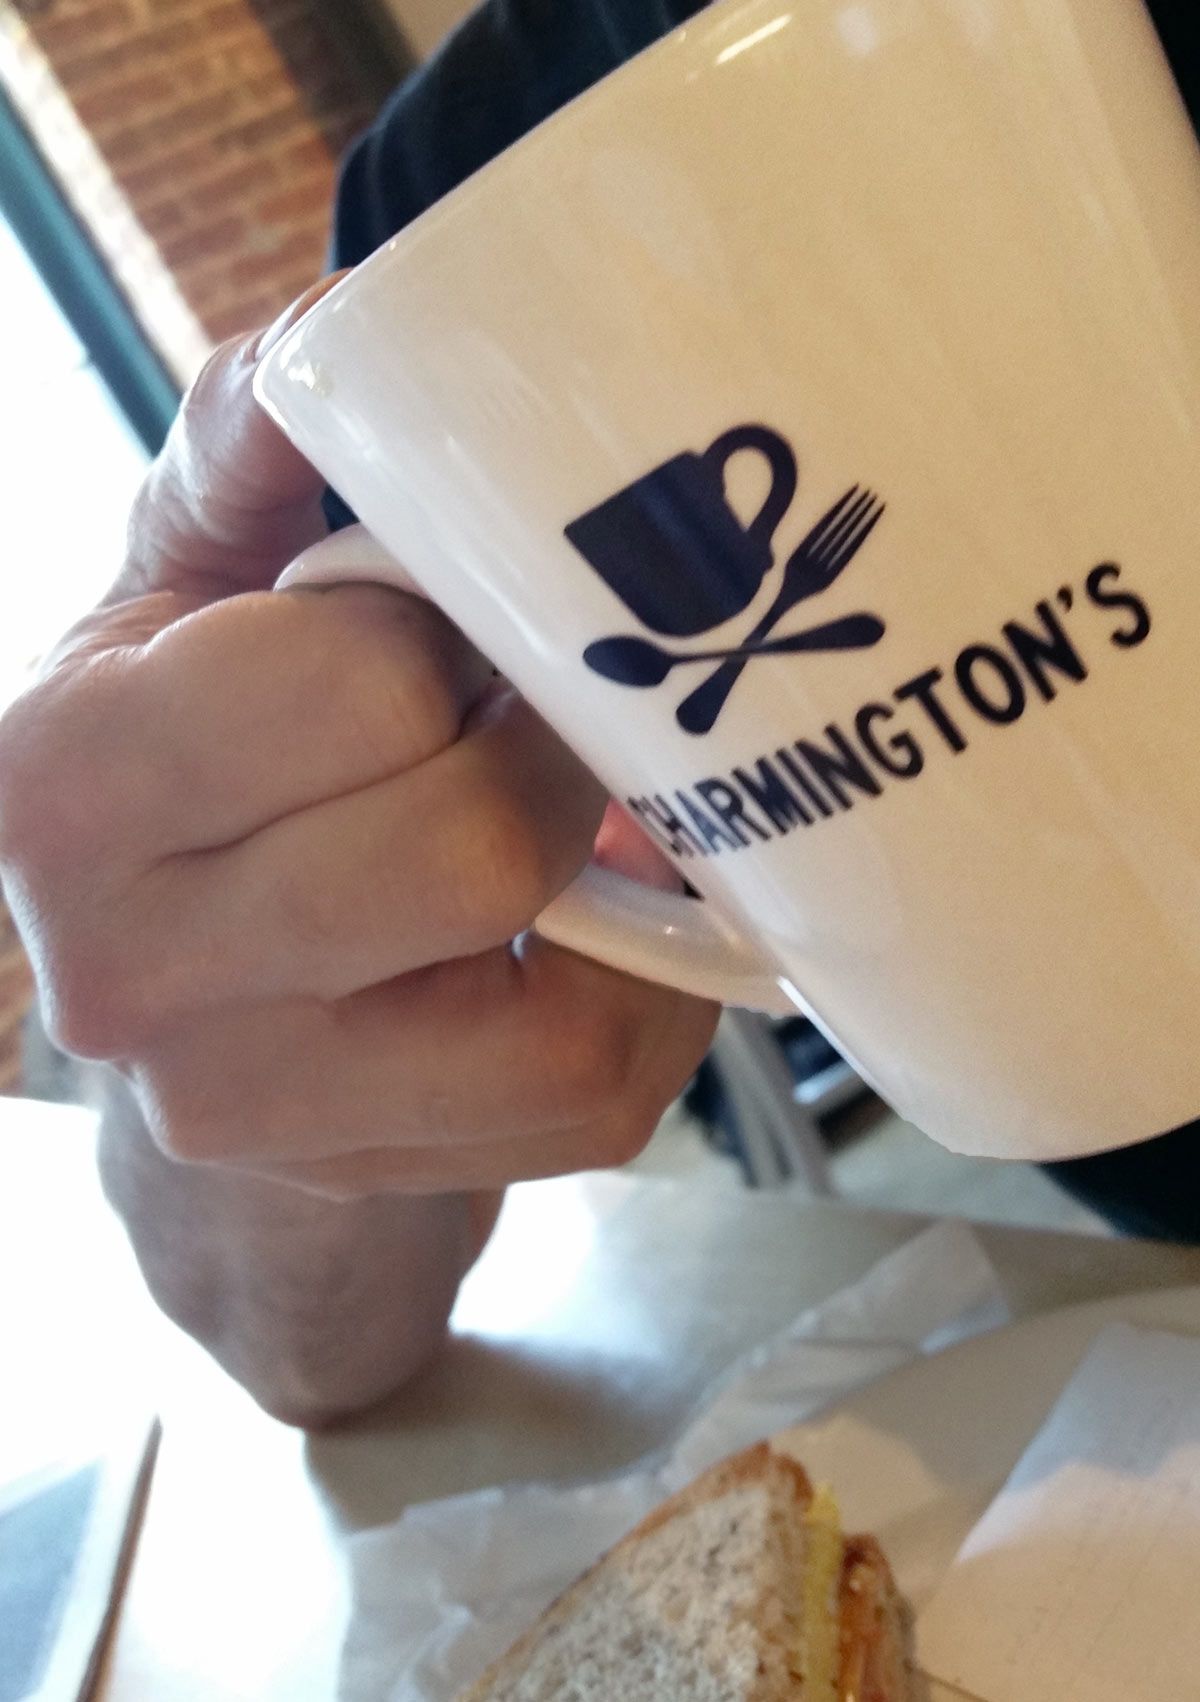 Charmington's